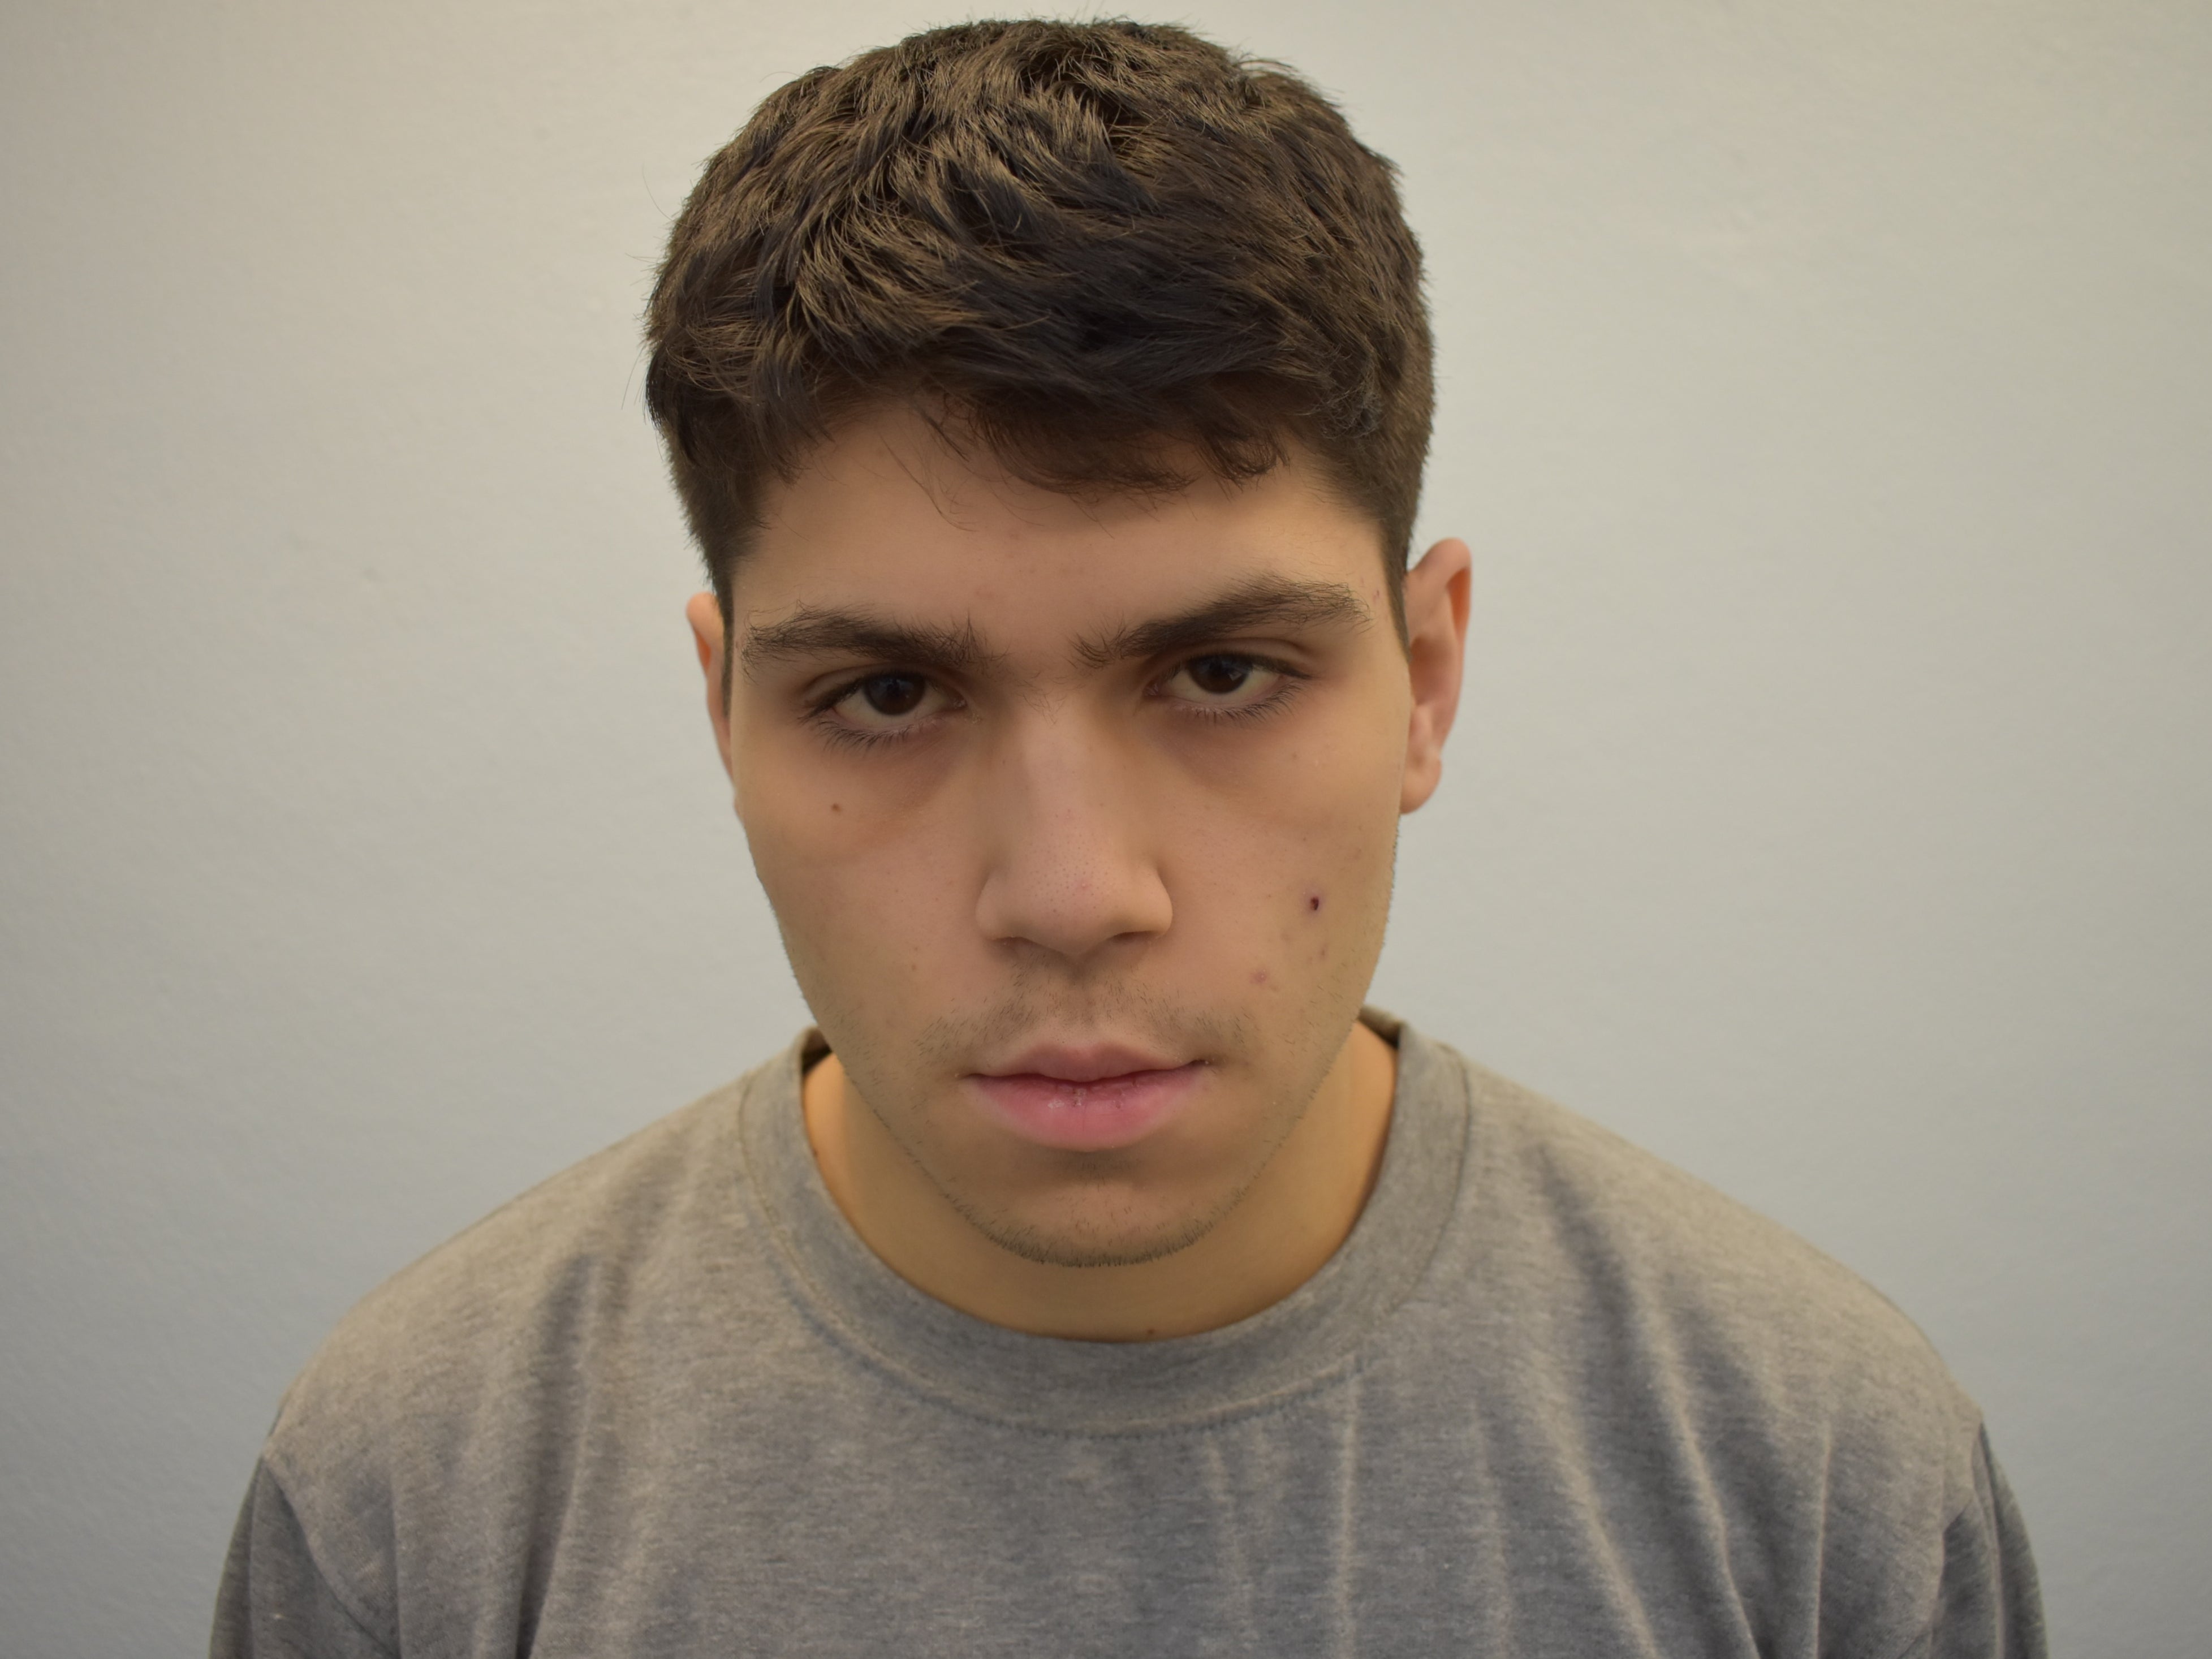 Luke Skelton, 19, was convicted of preparing an act of terrorism